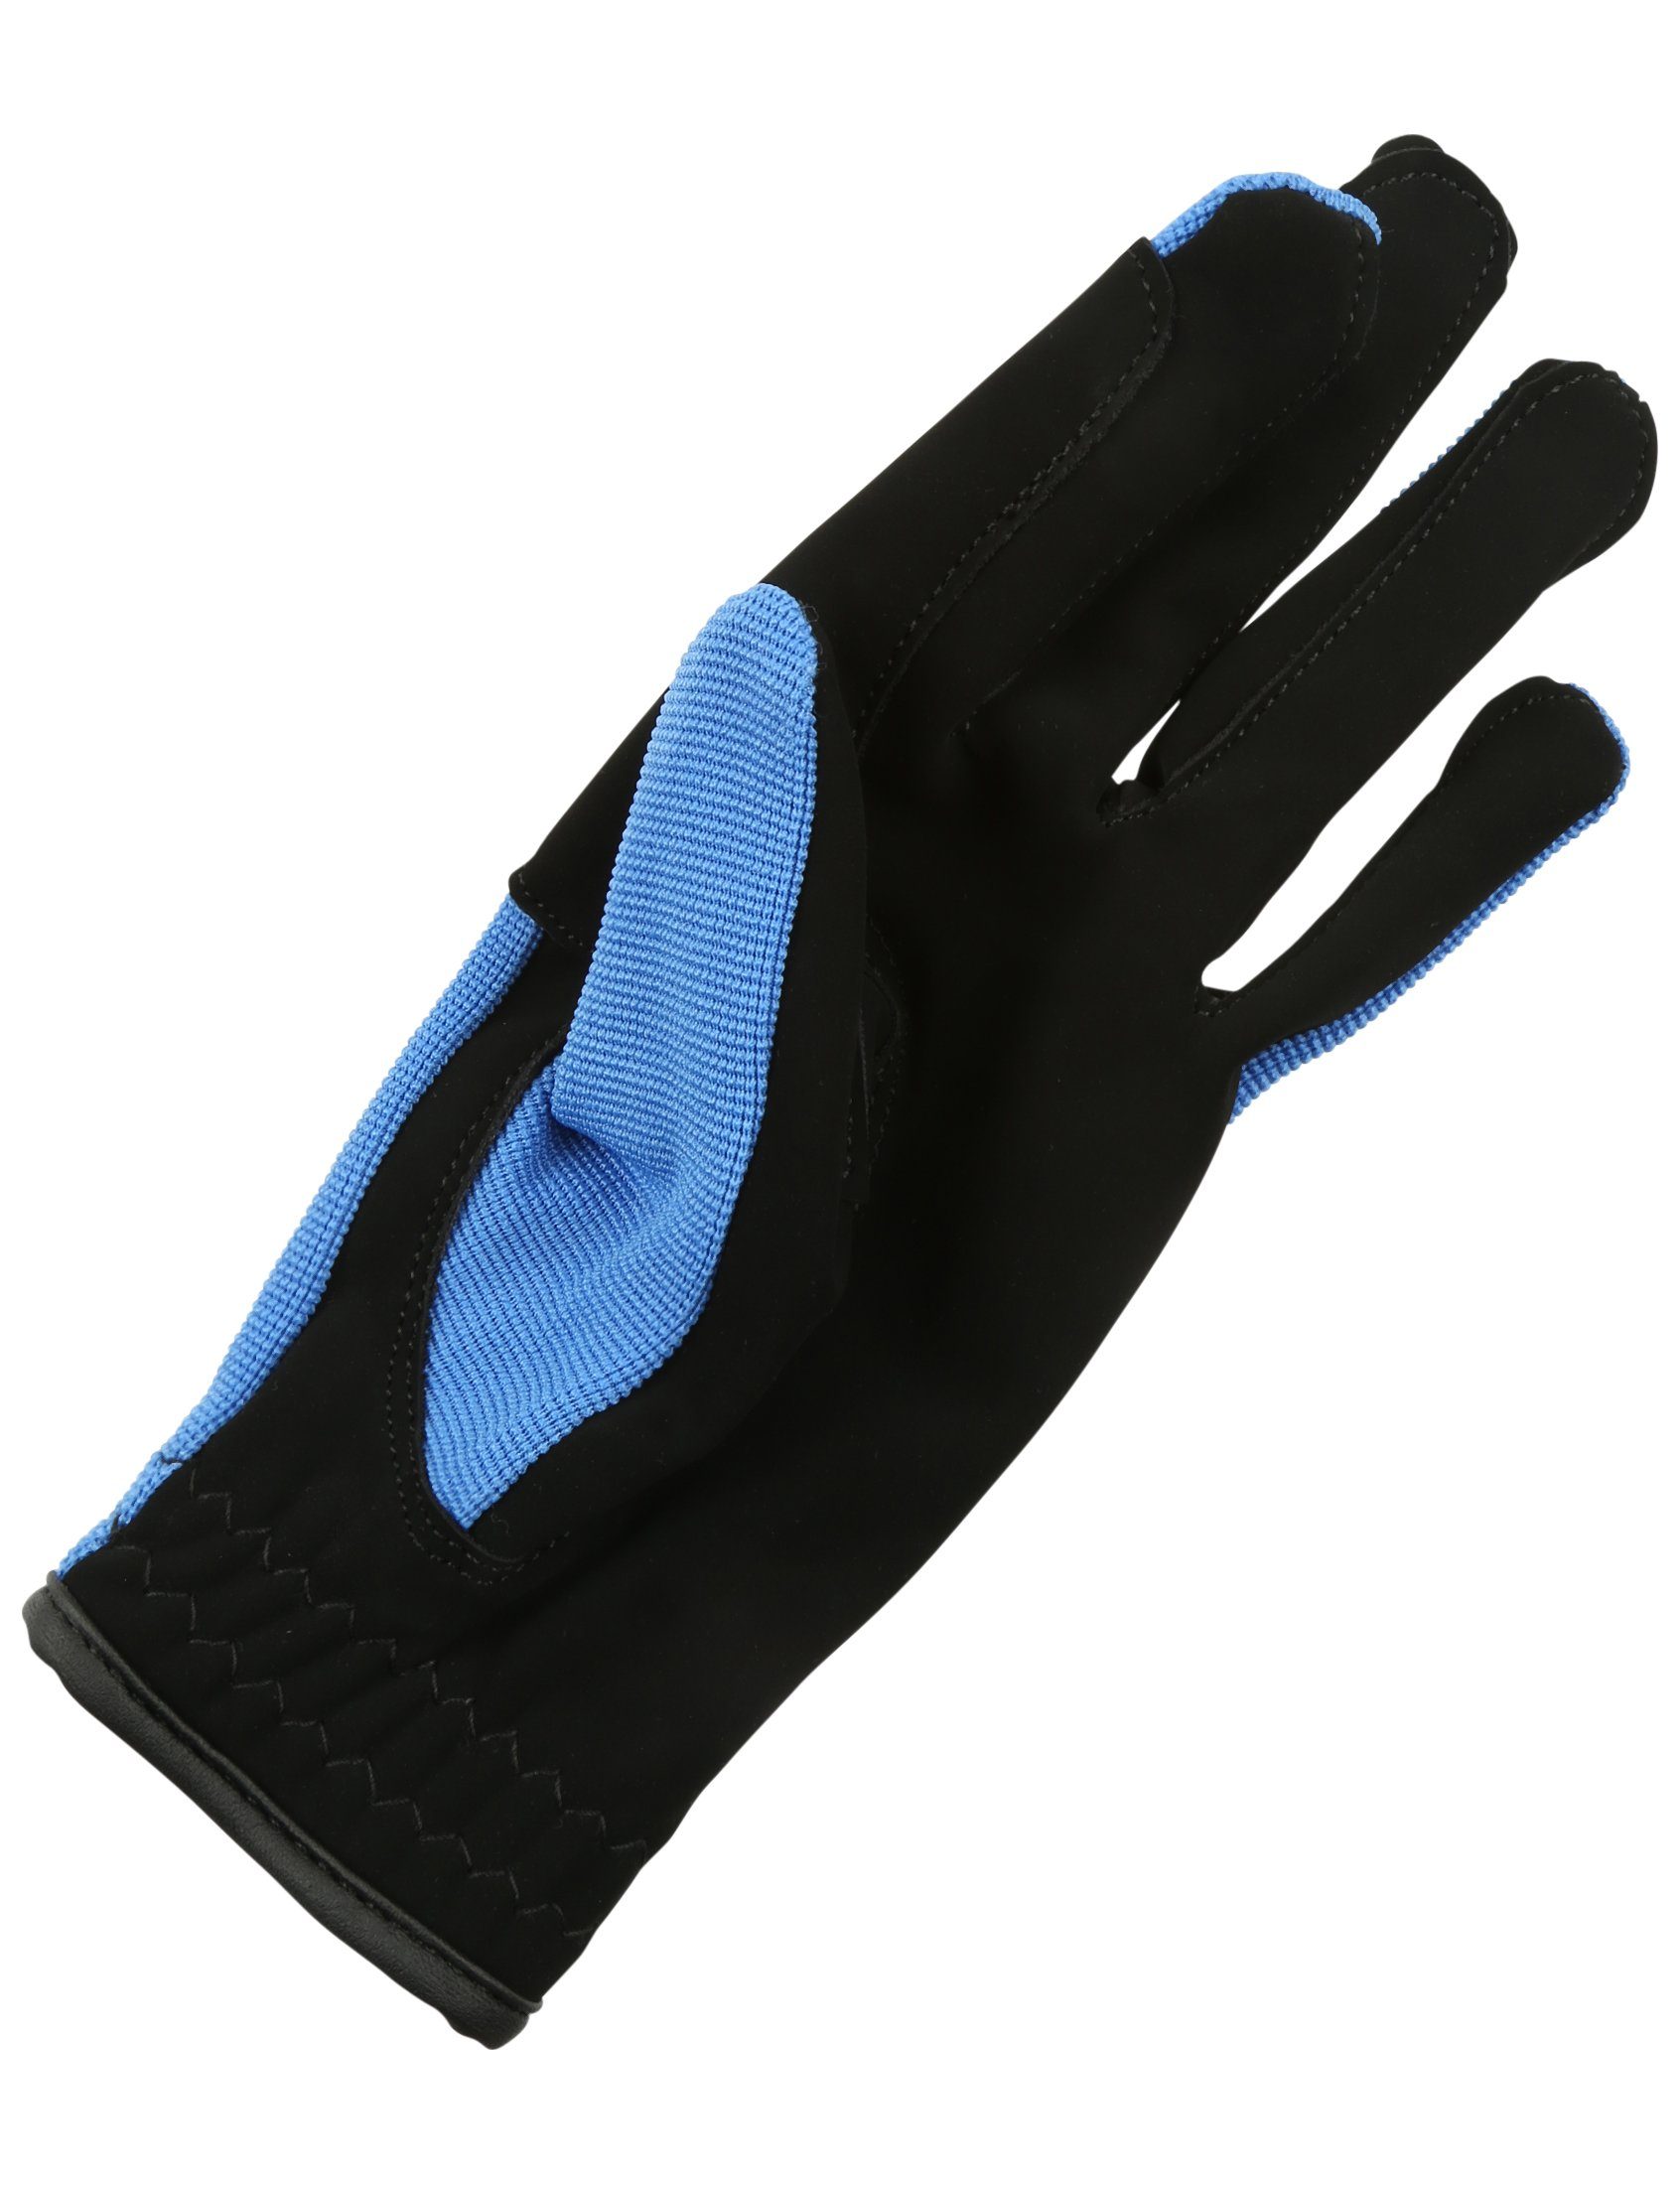 Zoomyo the Fleecehandschuhe material Damen Handschuhe thin Blau REIT pleasantly Gloves is Royal